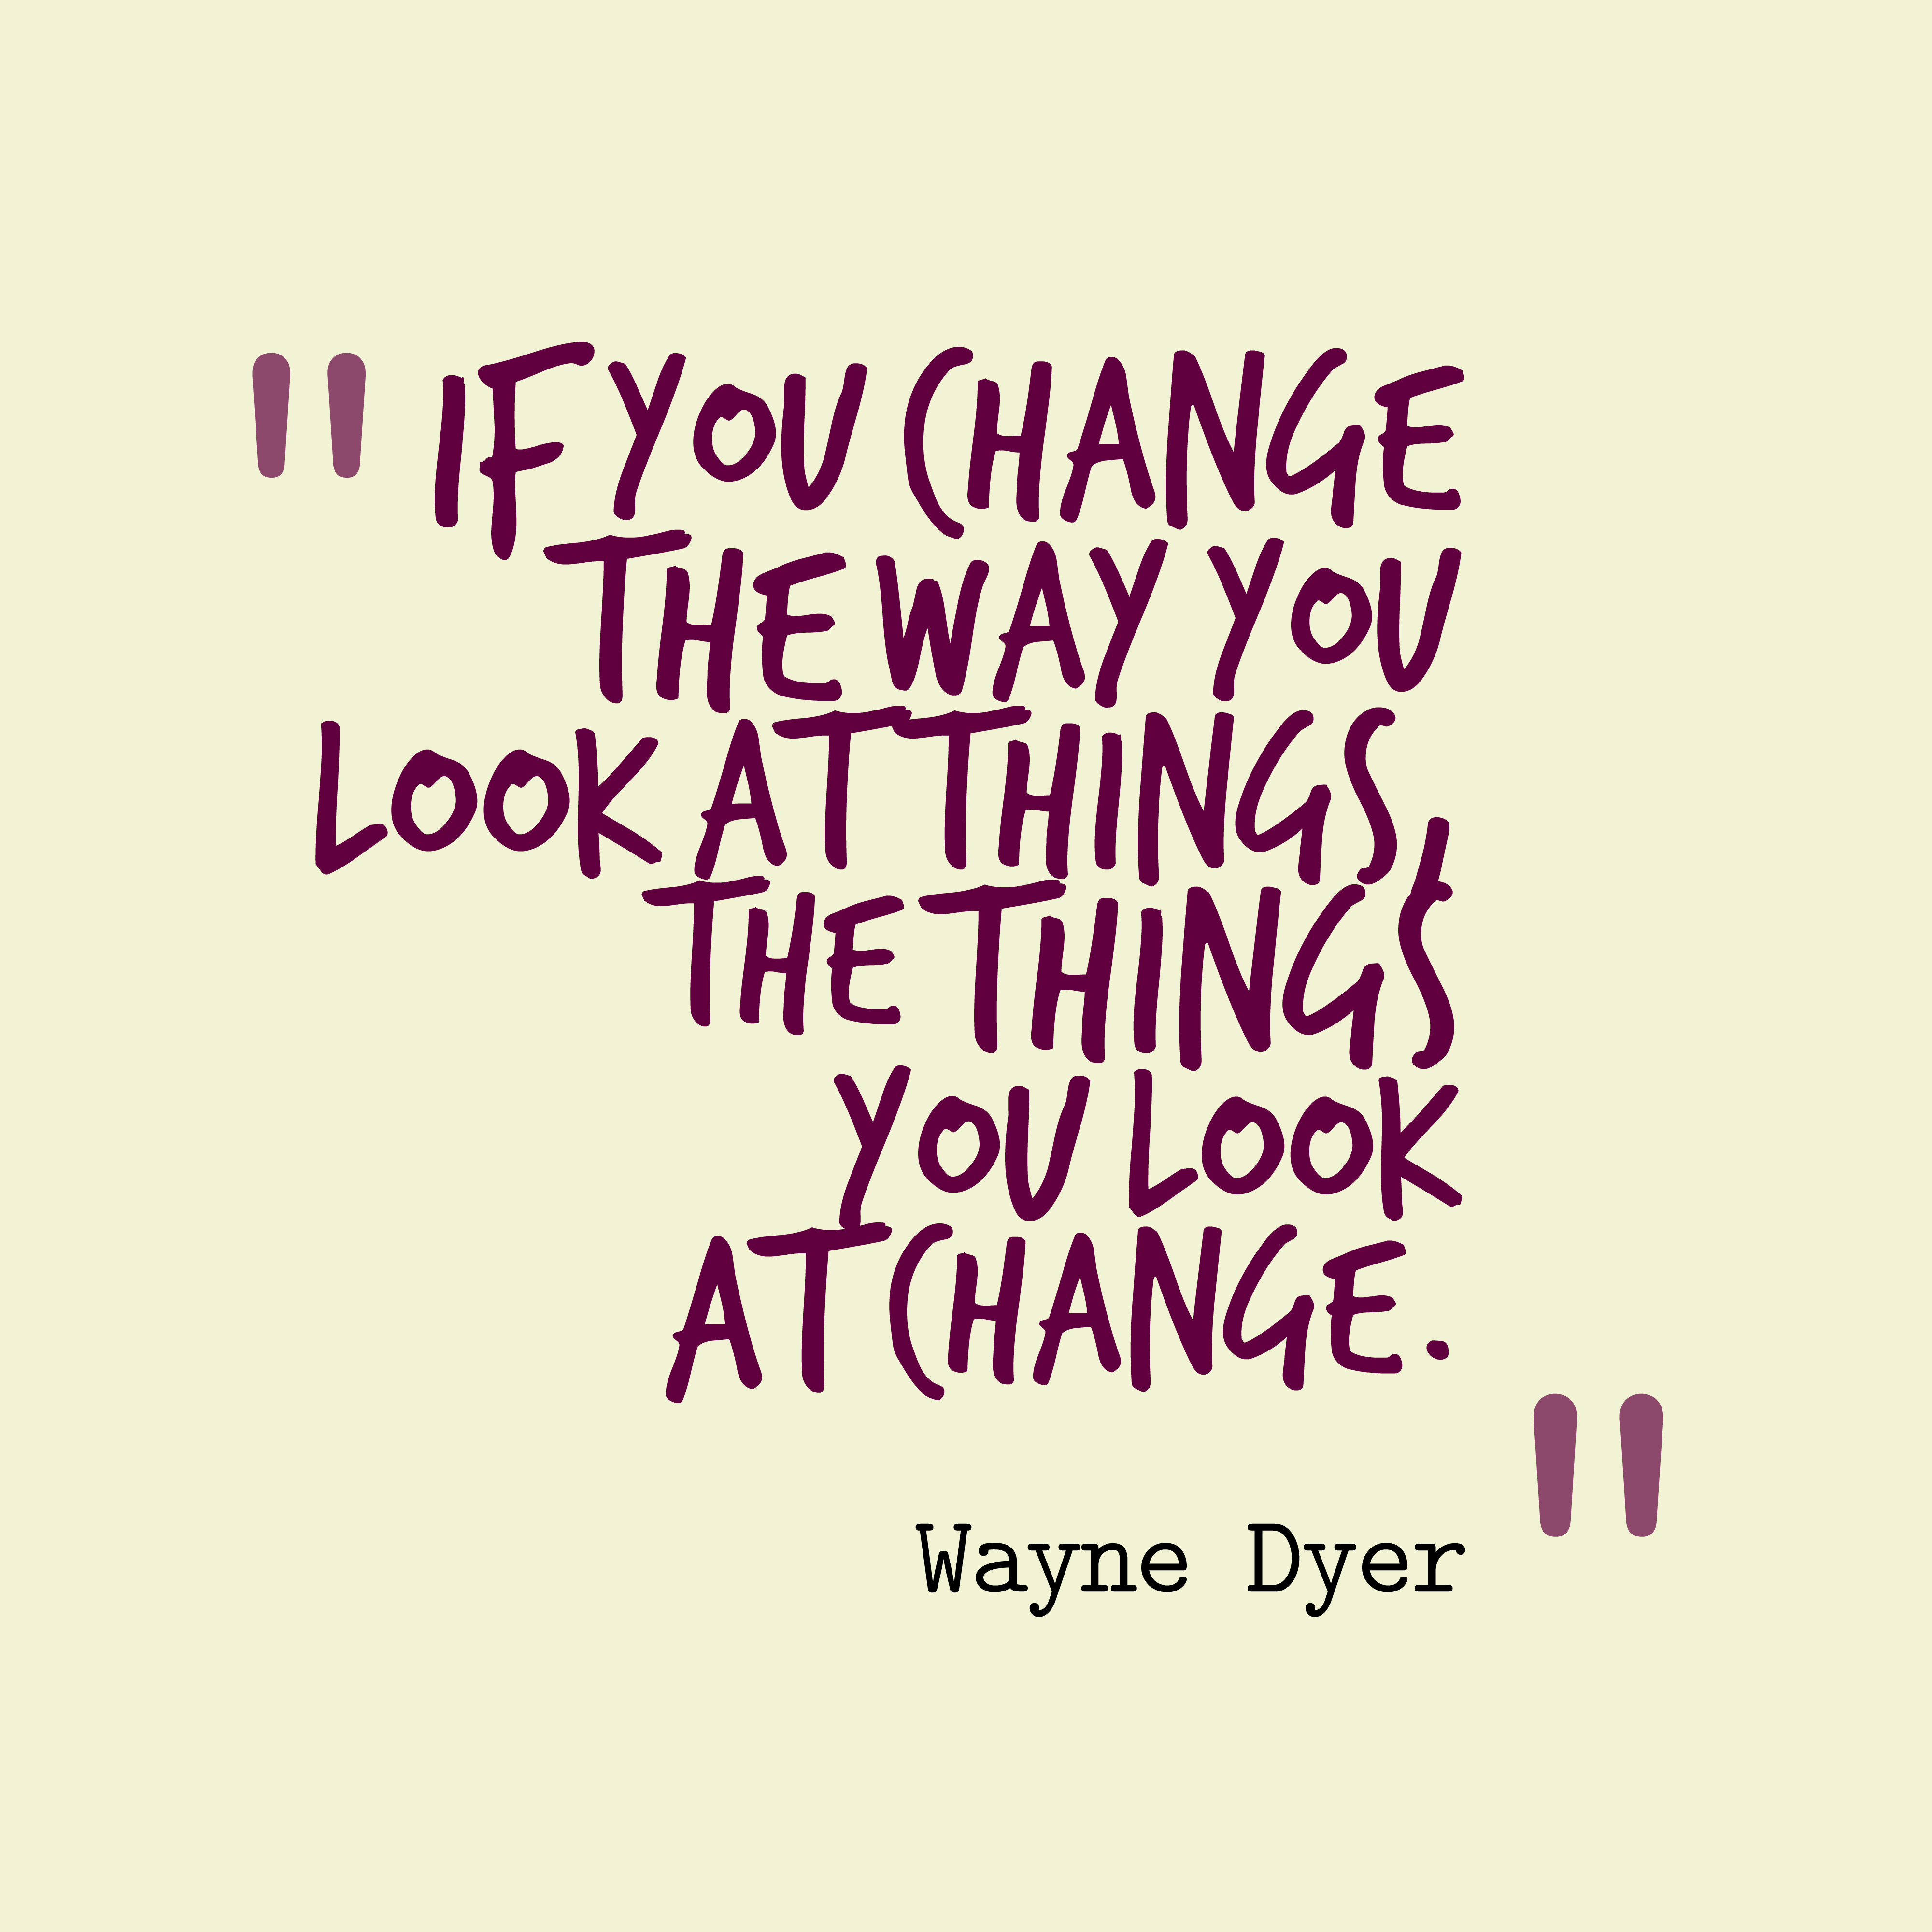 best wayne dyer quote on change